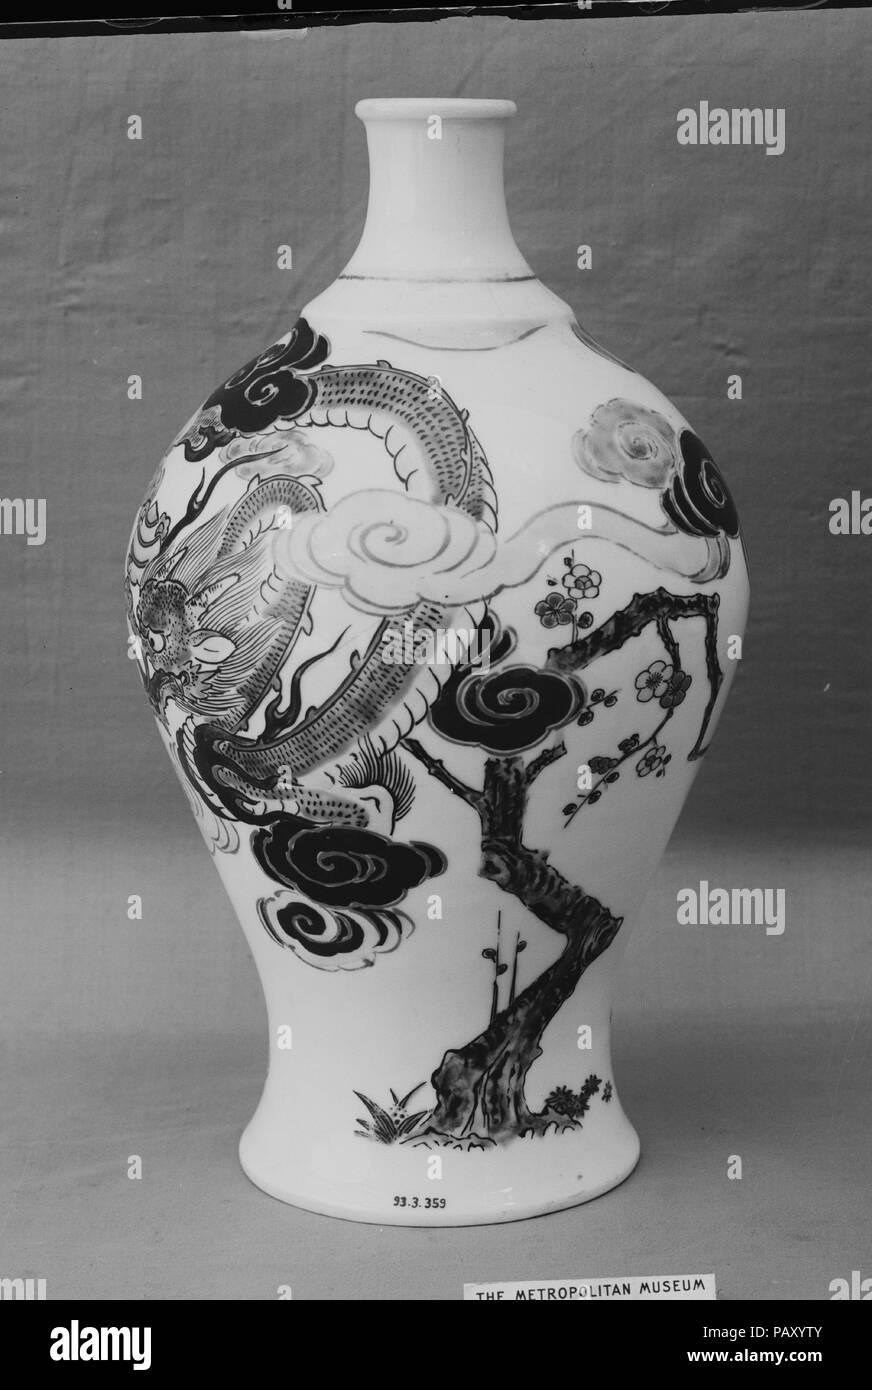 Vase. Culture: Japan. Dimensions: H. 9 3/4 in. (24.8 cm); Diam. 6 in. (15.2 cm). Date: 1780. Museum: Metropolitan Museum of Art, New York, USA. Stock Photo